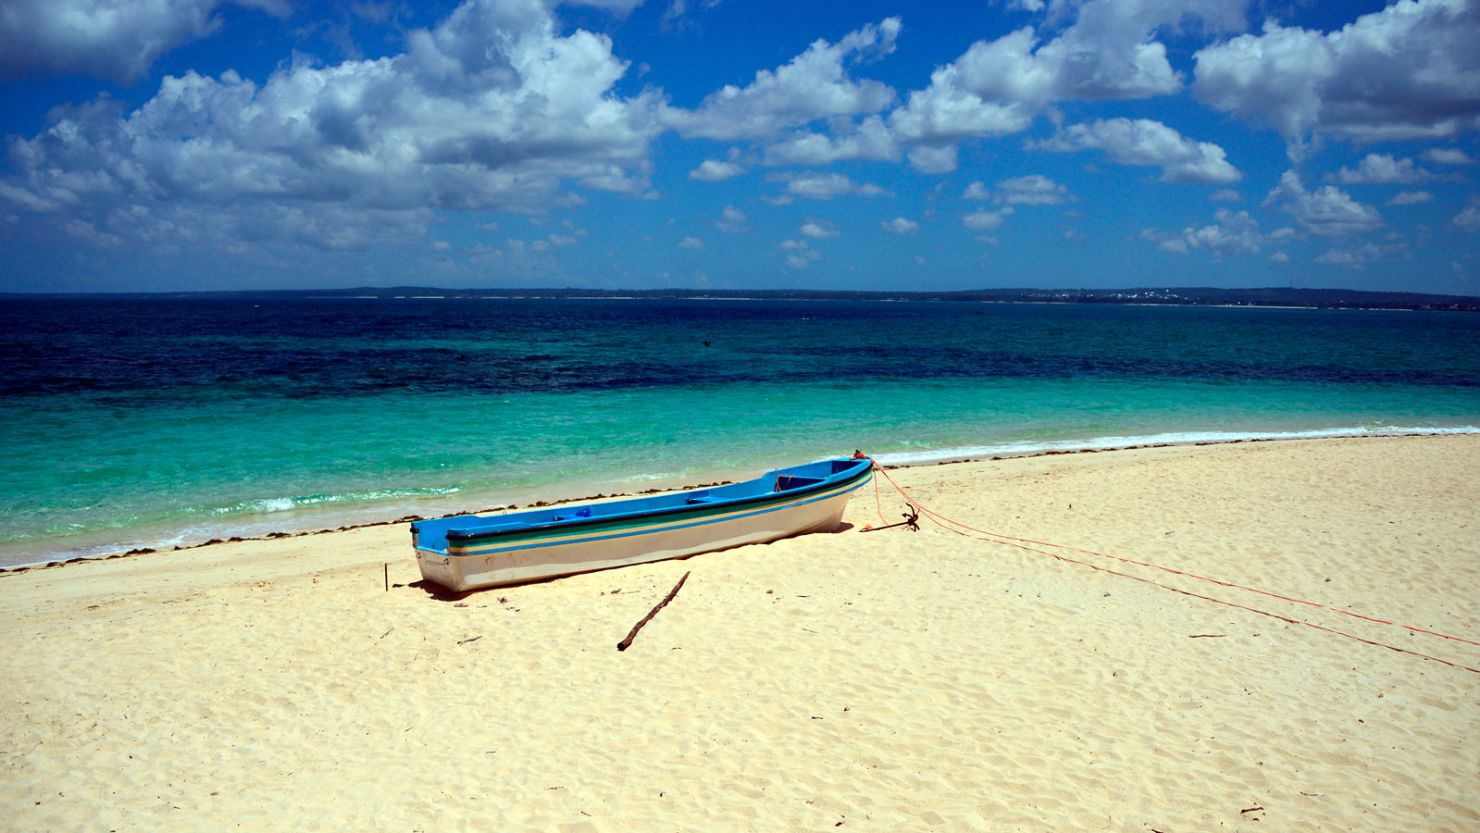 Zanzibar's beaches are popular with tourists.